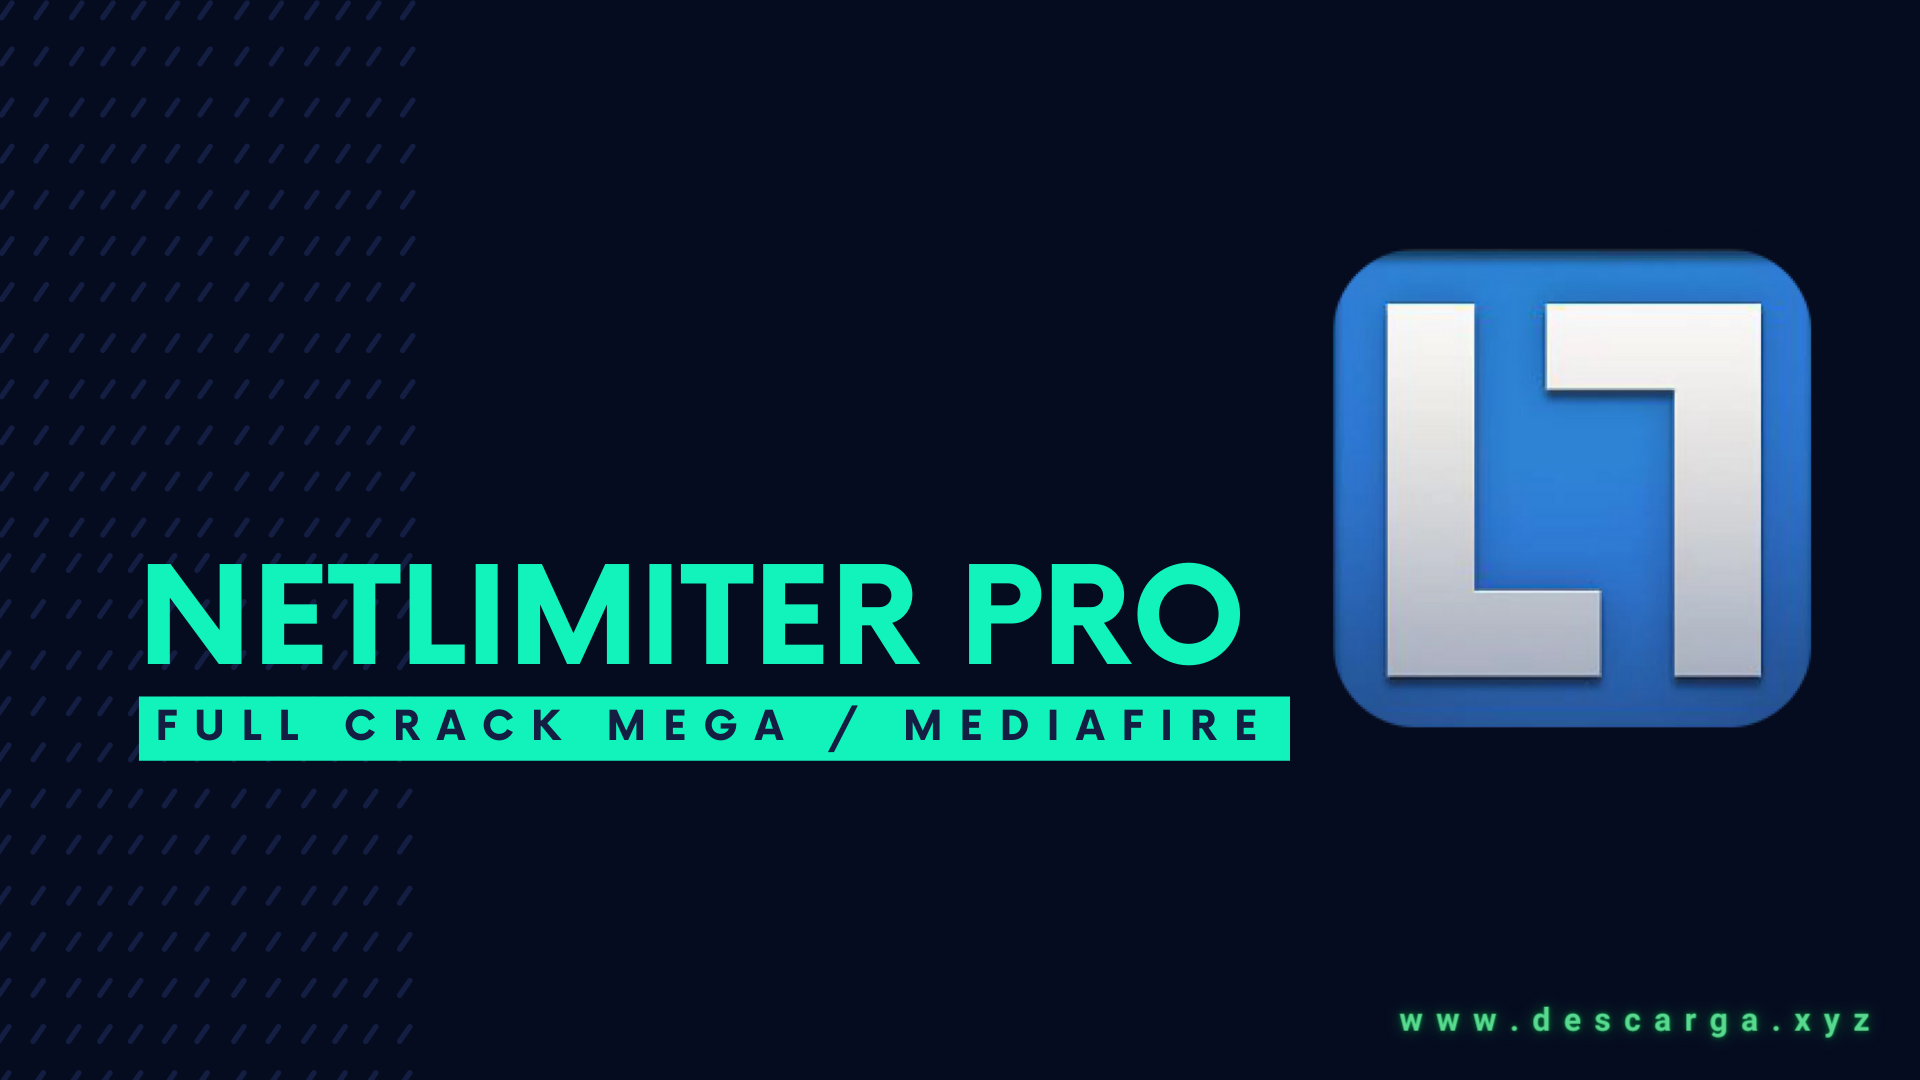 NetLimiter Pro Full Crack Descargar Gratis por Mega